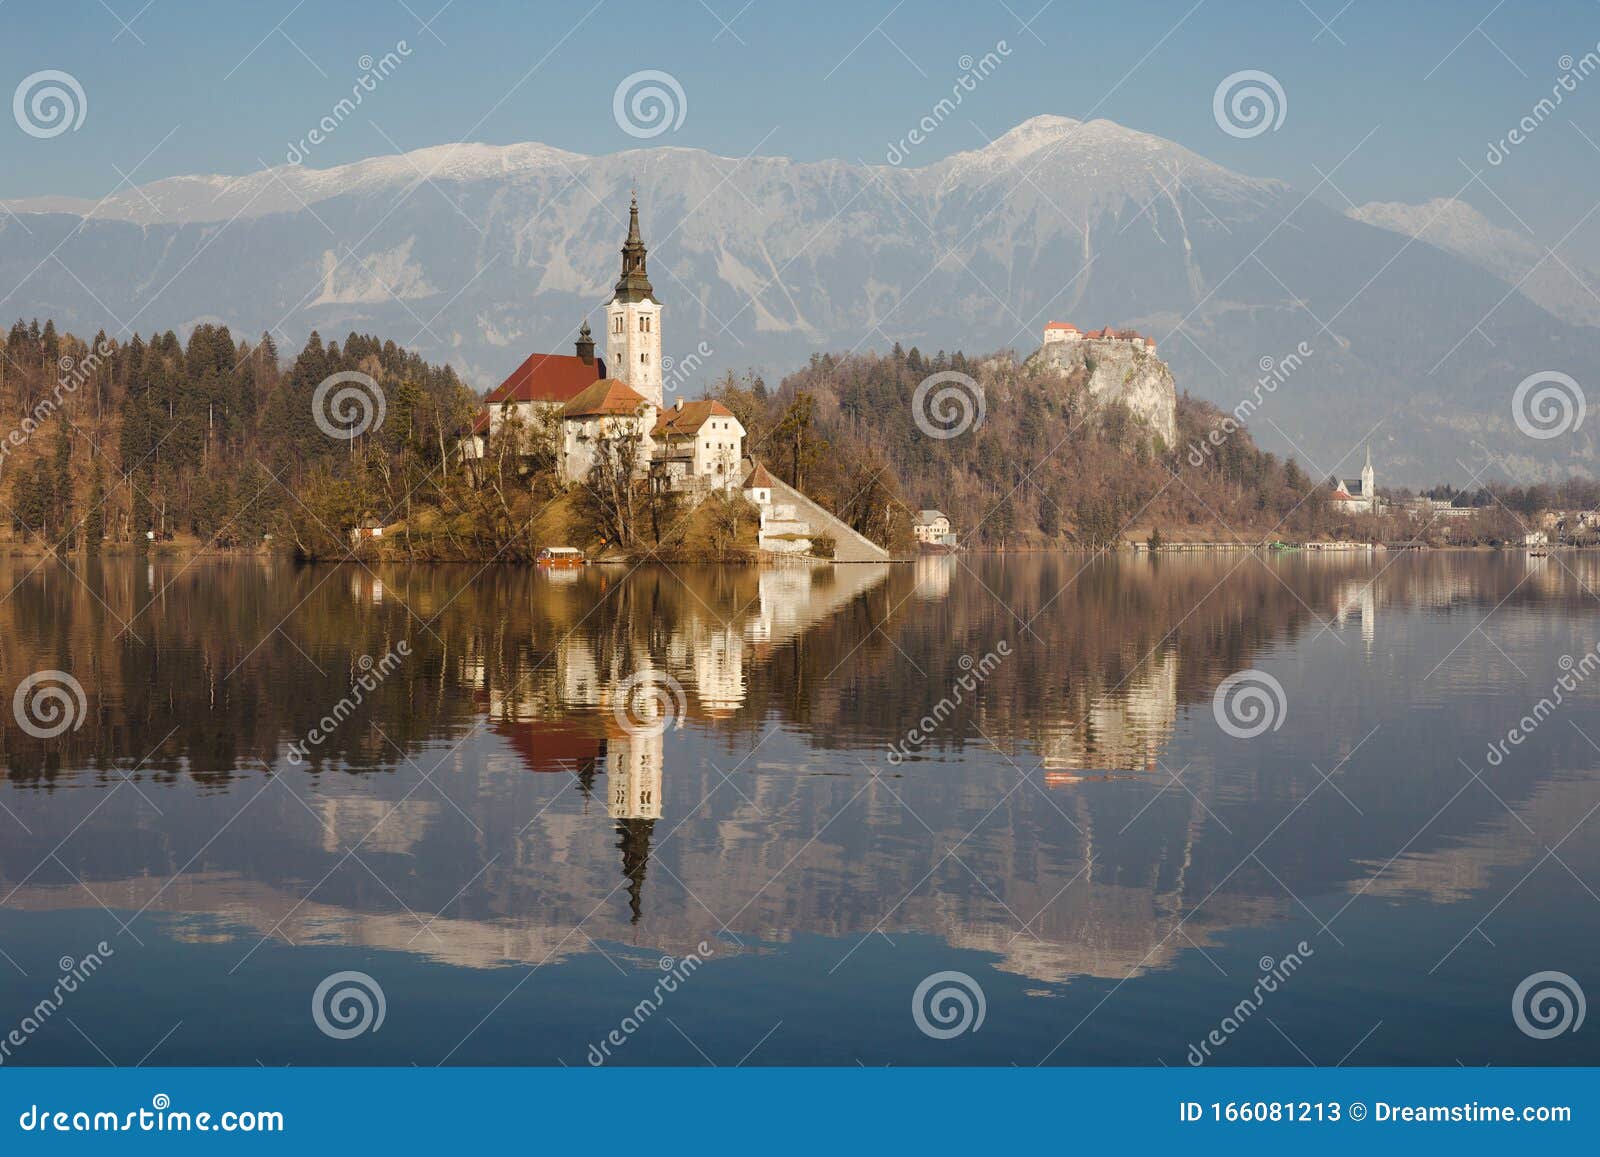 bled lake sync reflection, slovenia